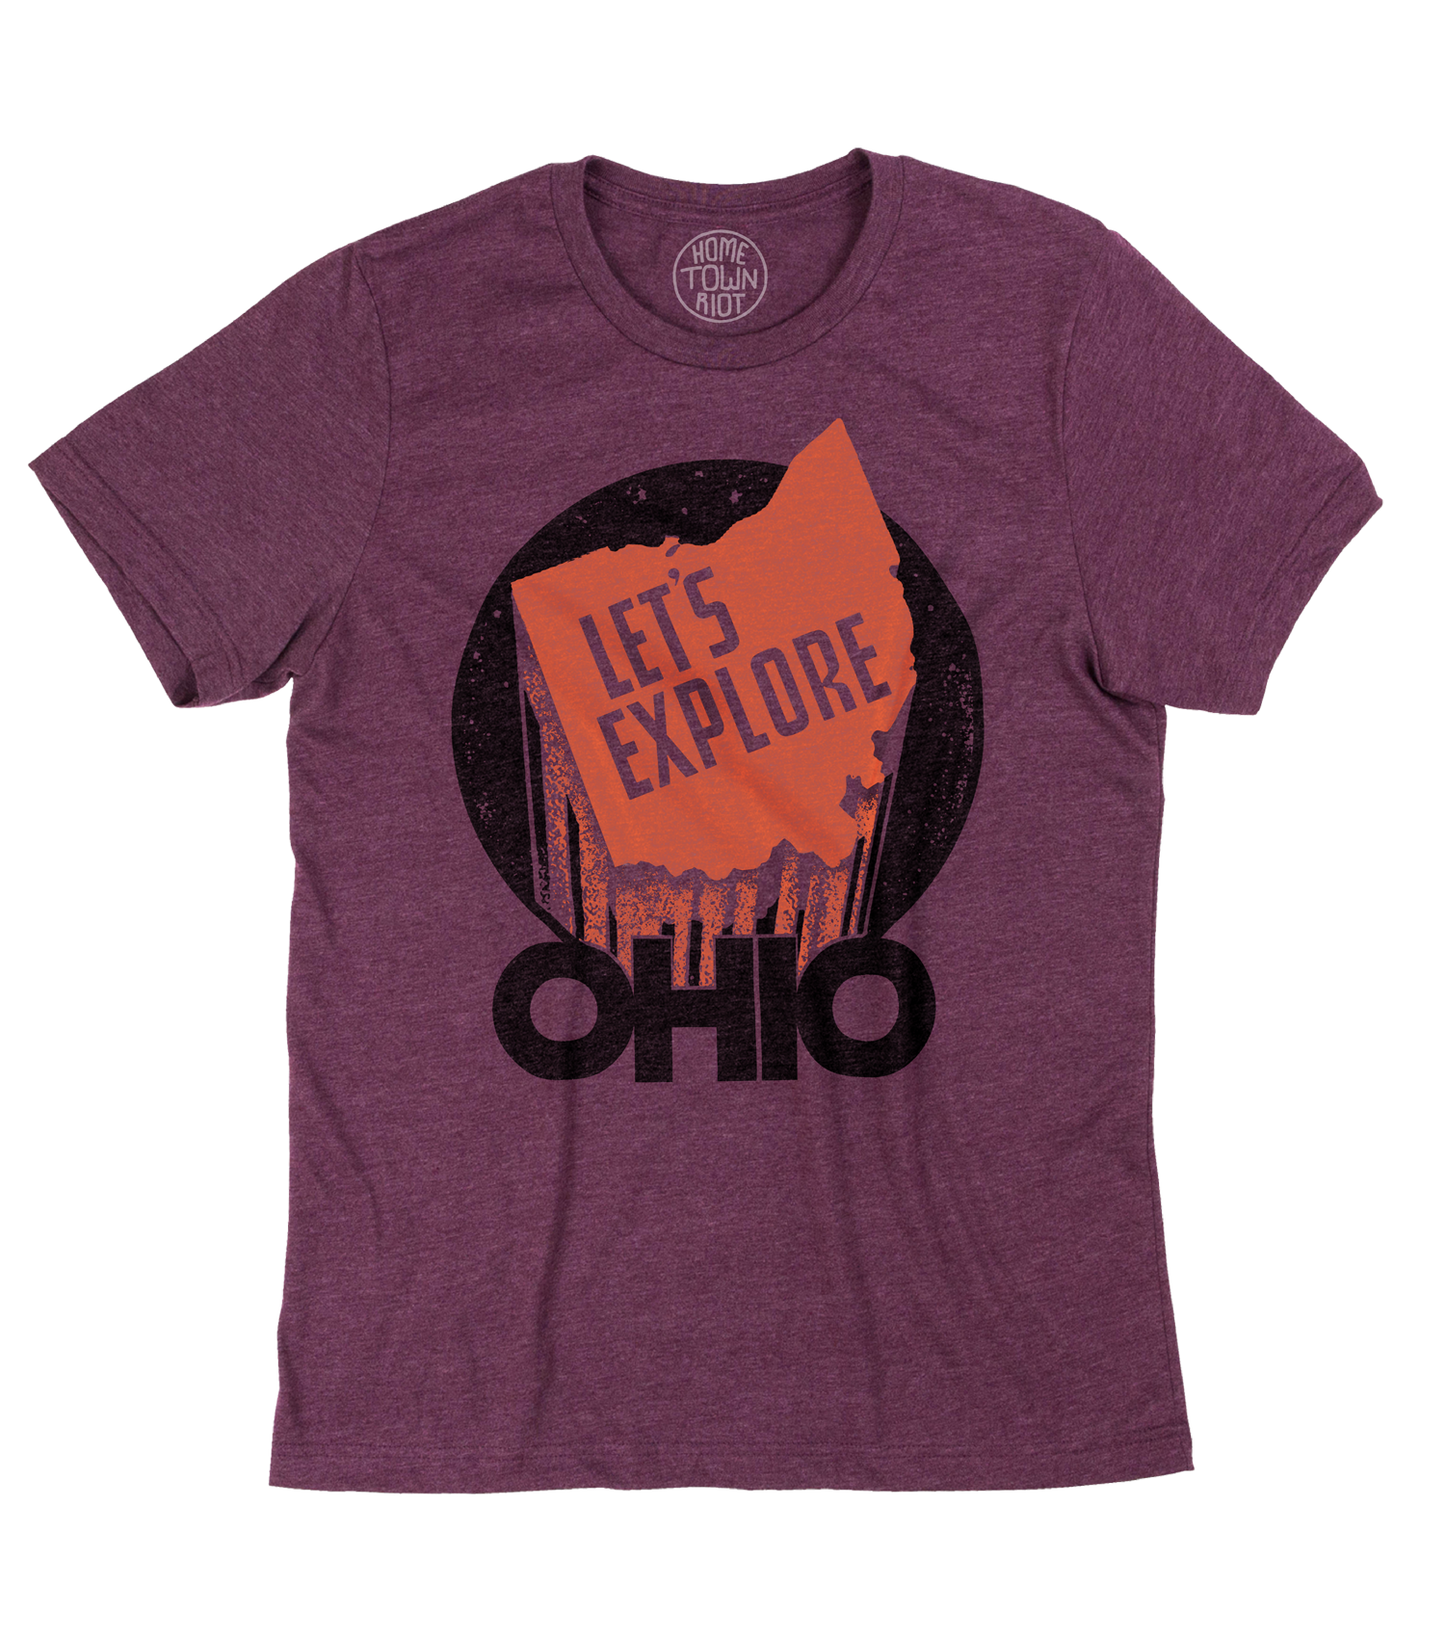 Let's Explore Ohio Shirt